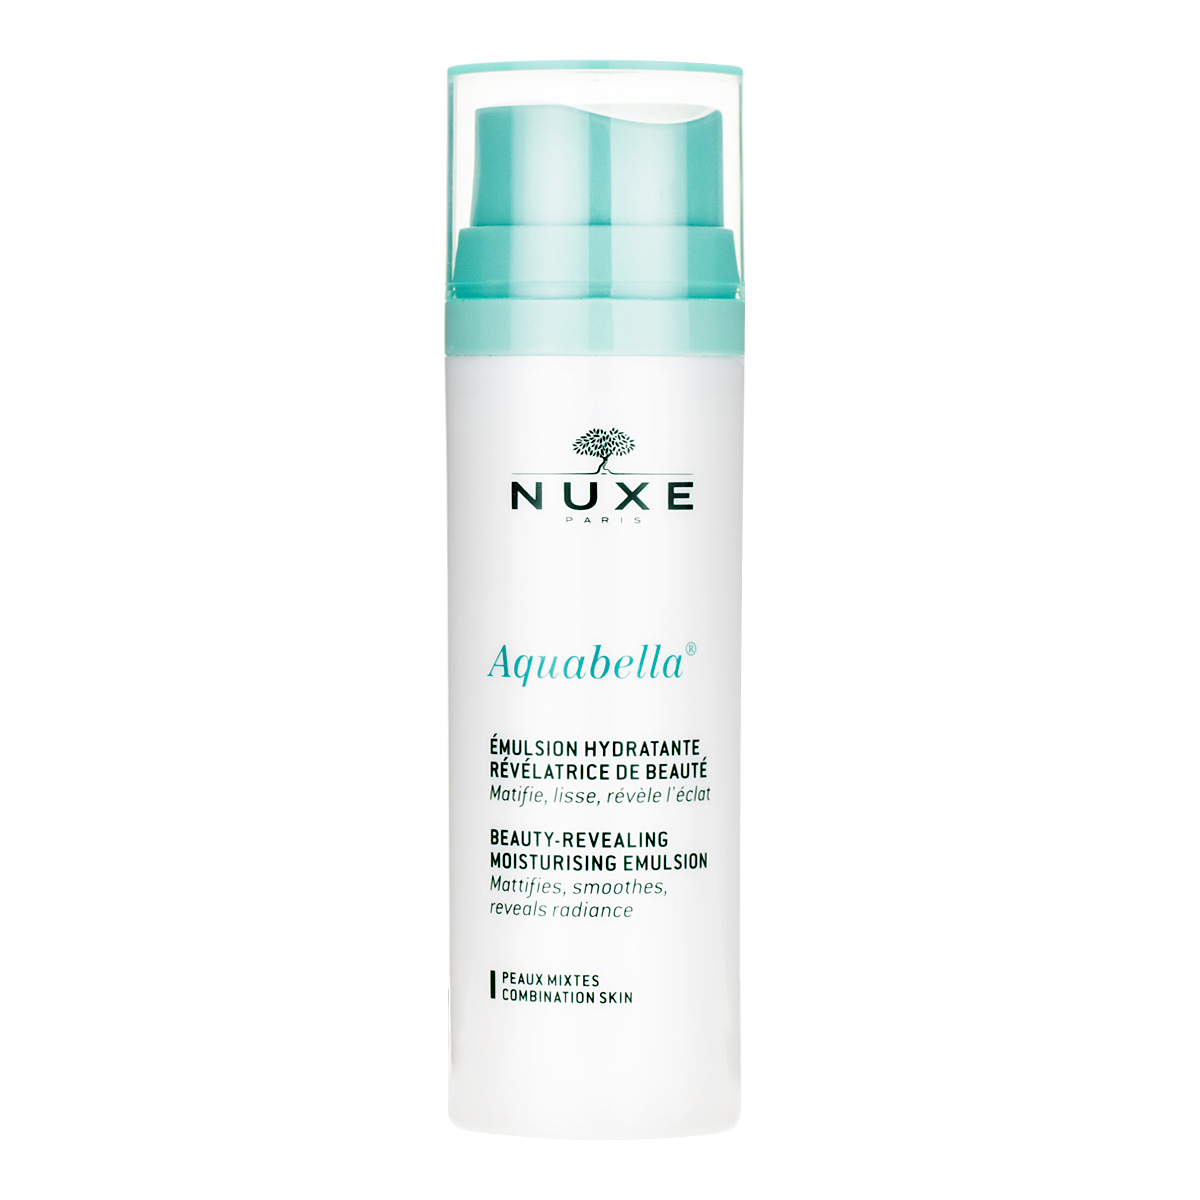 Nuxe Aquabella Beauty-Revealing Moisturising Emulsion-50ML - Creams | NUXE  - nicolas care store